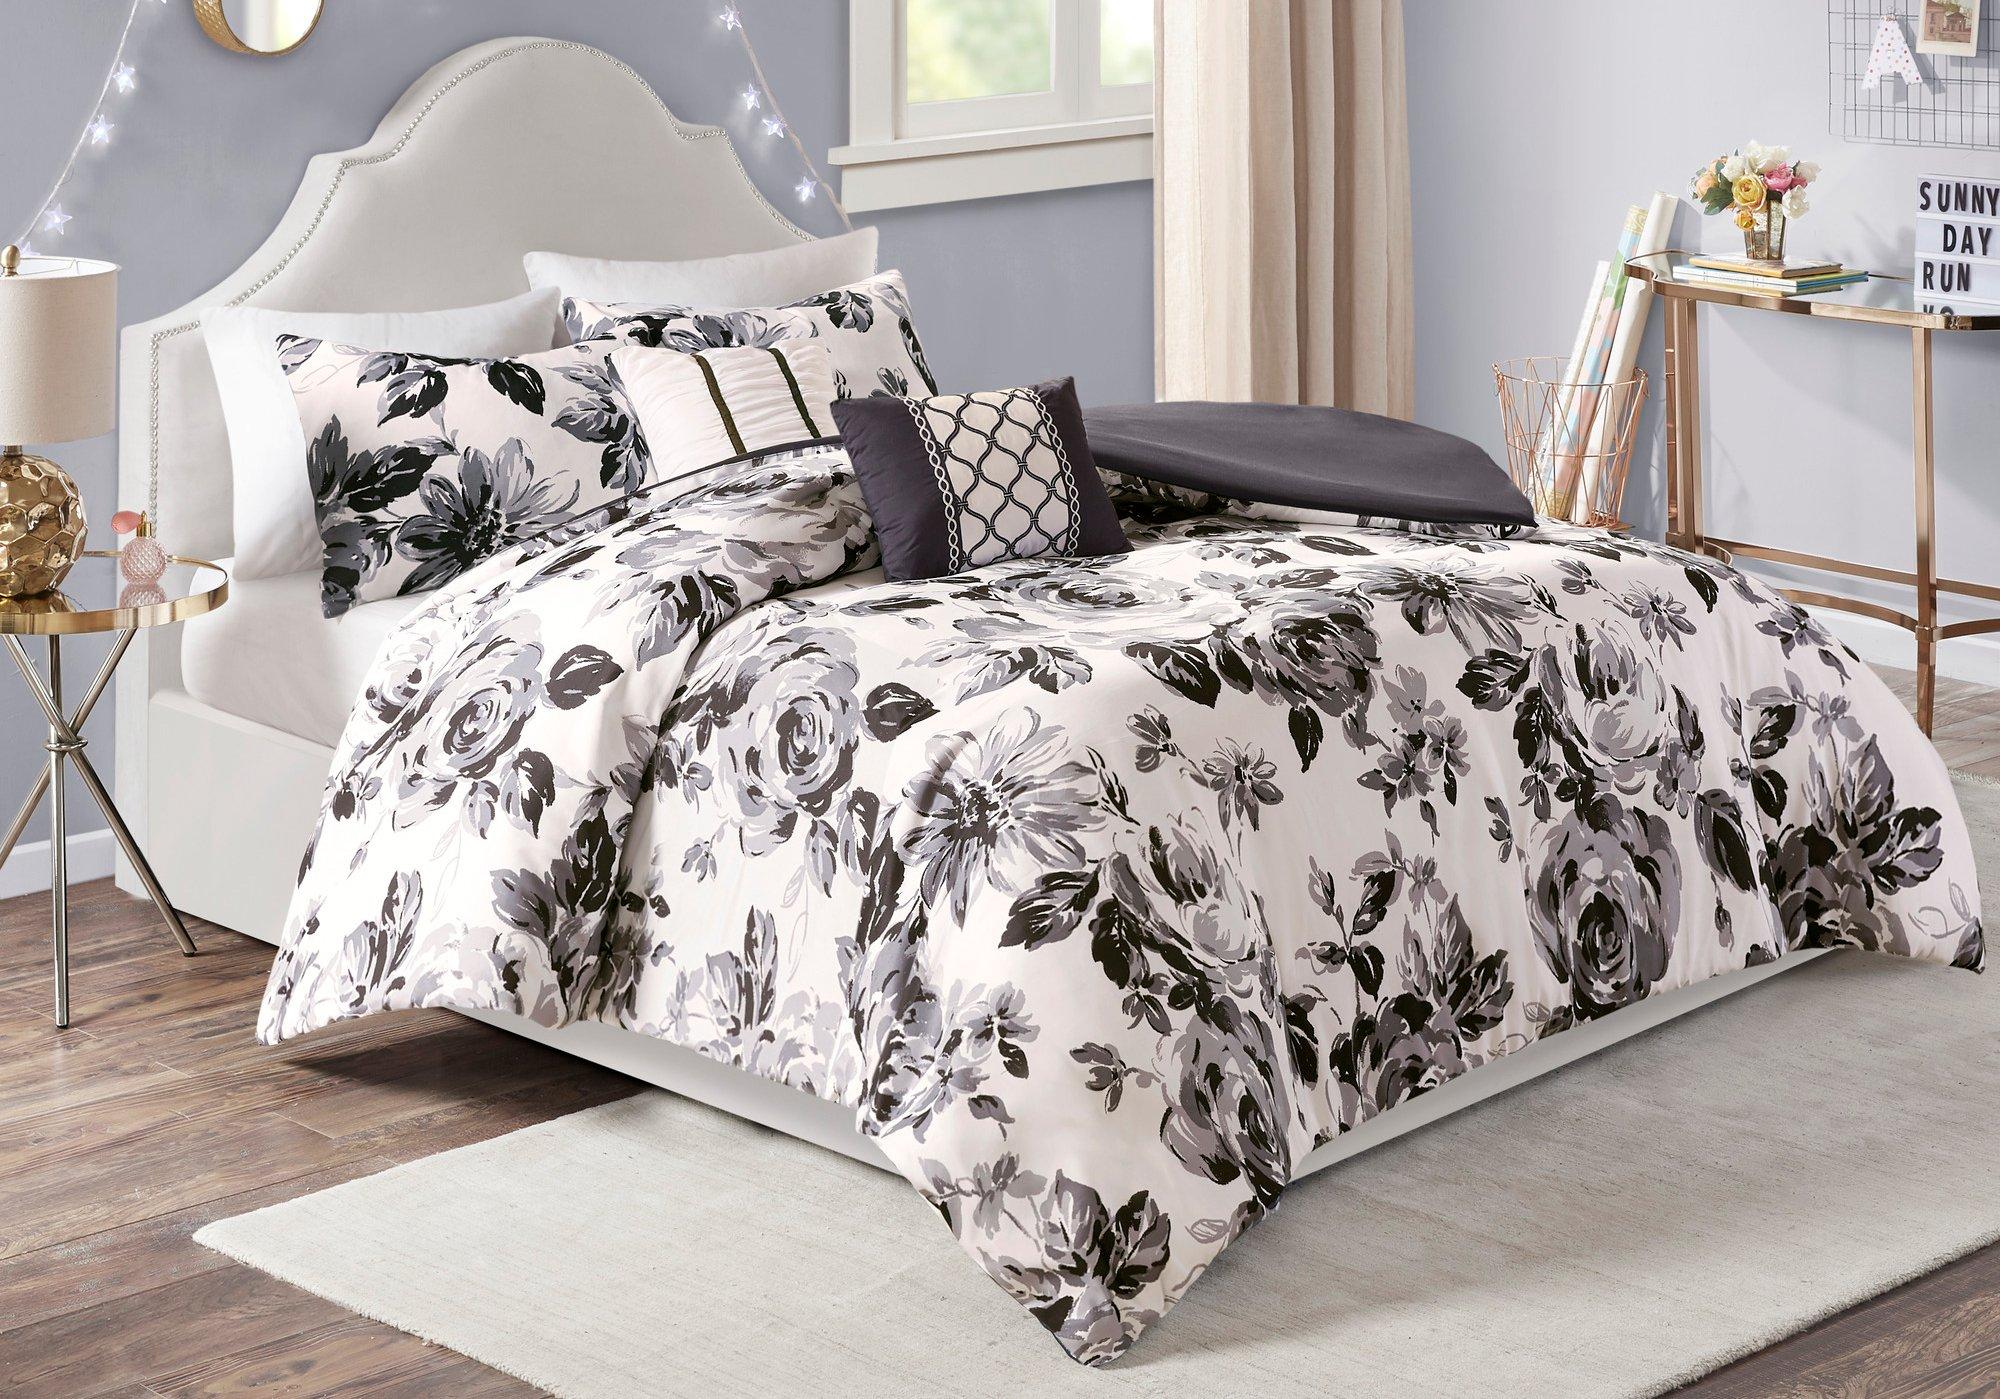 Photos - Bed Linen Intelligent Design Dorsey Floral Print Duvet Cover Set